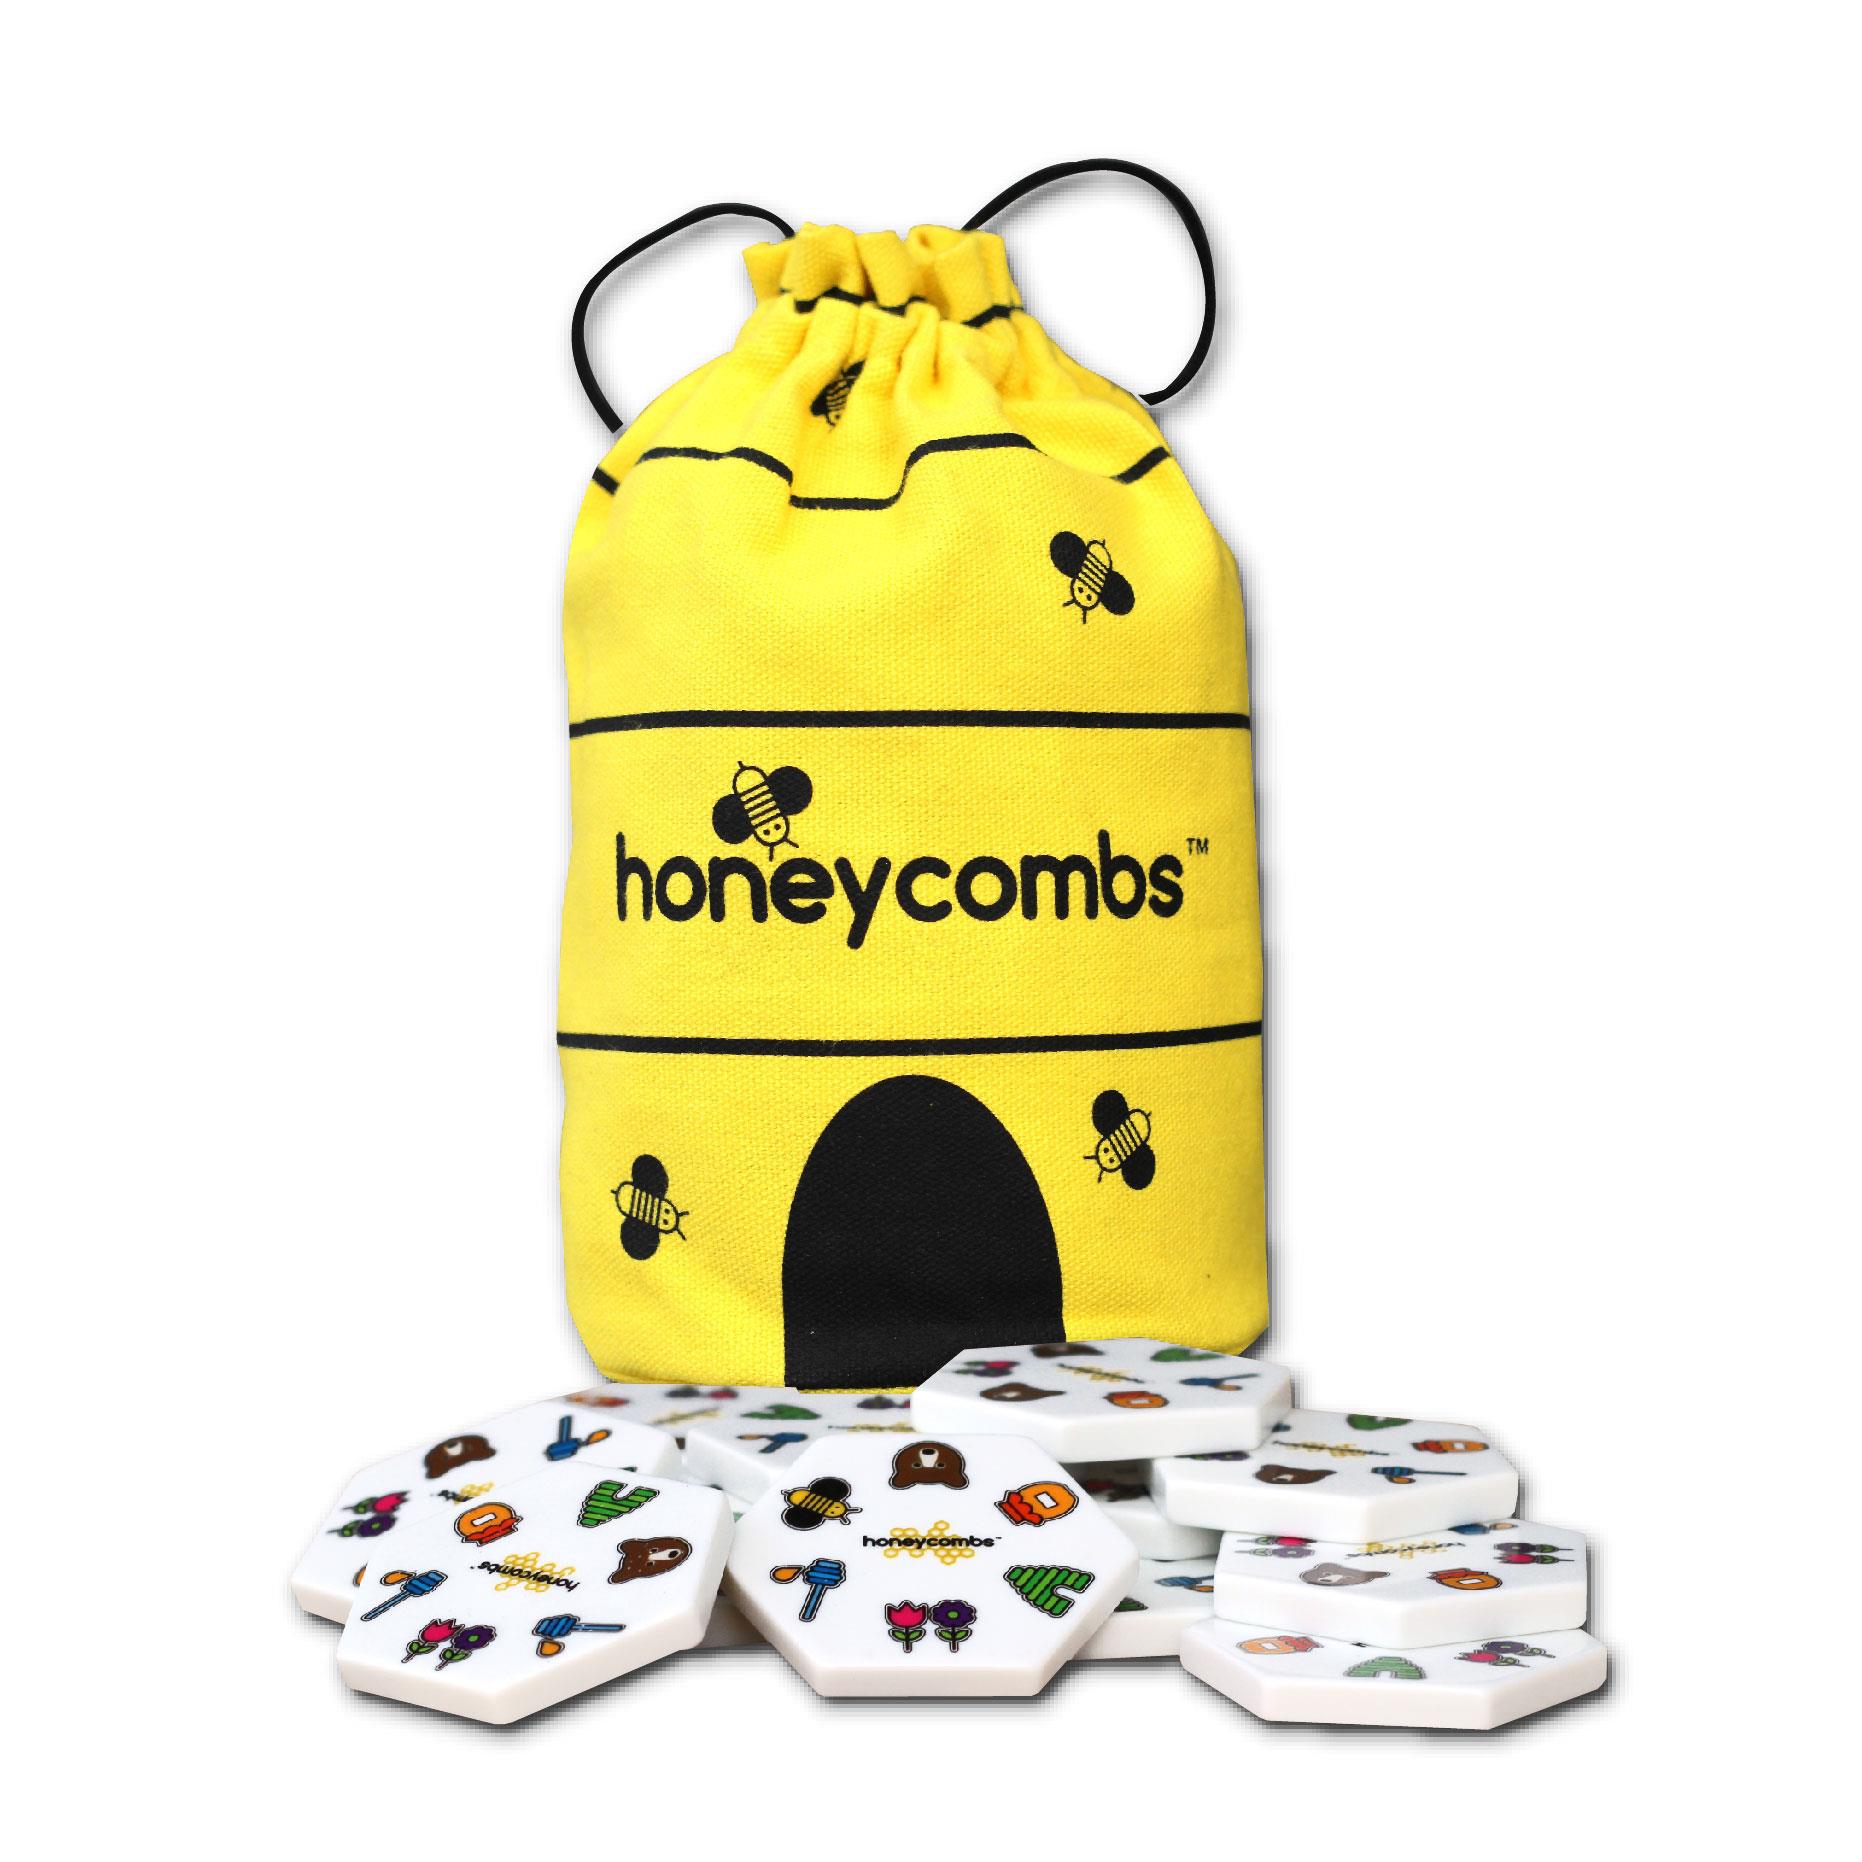 Honeycombs - plastry miodu